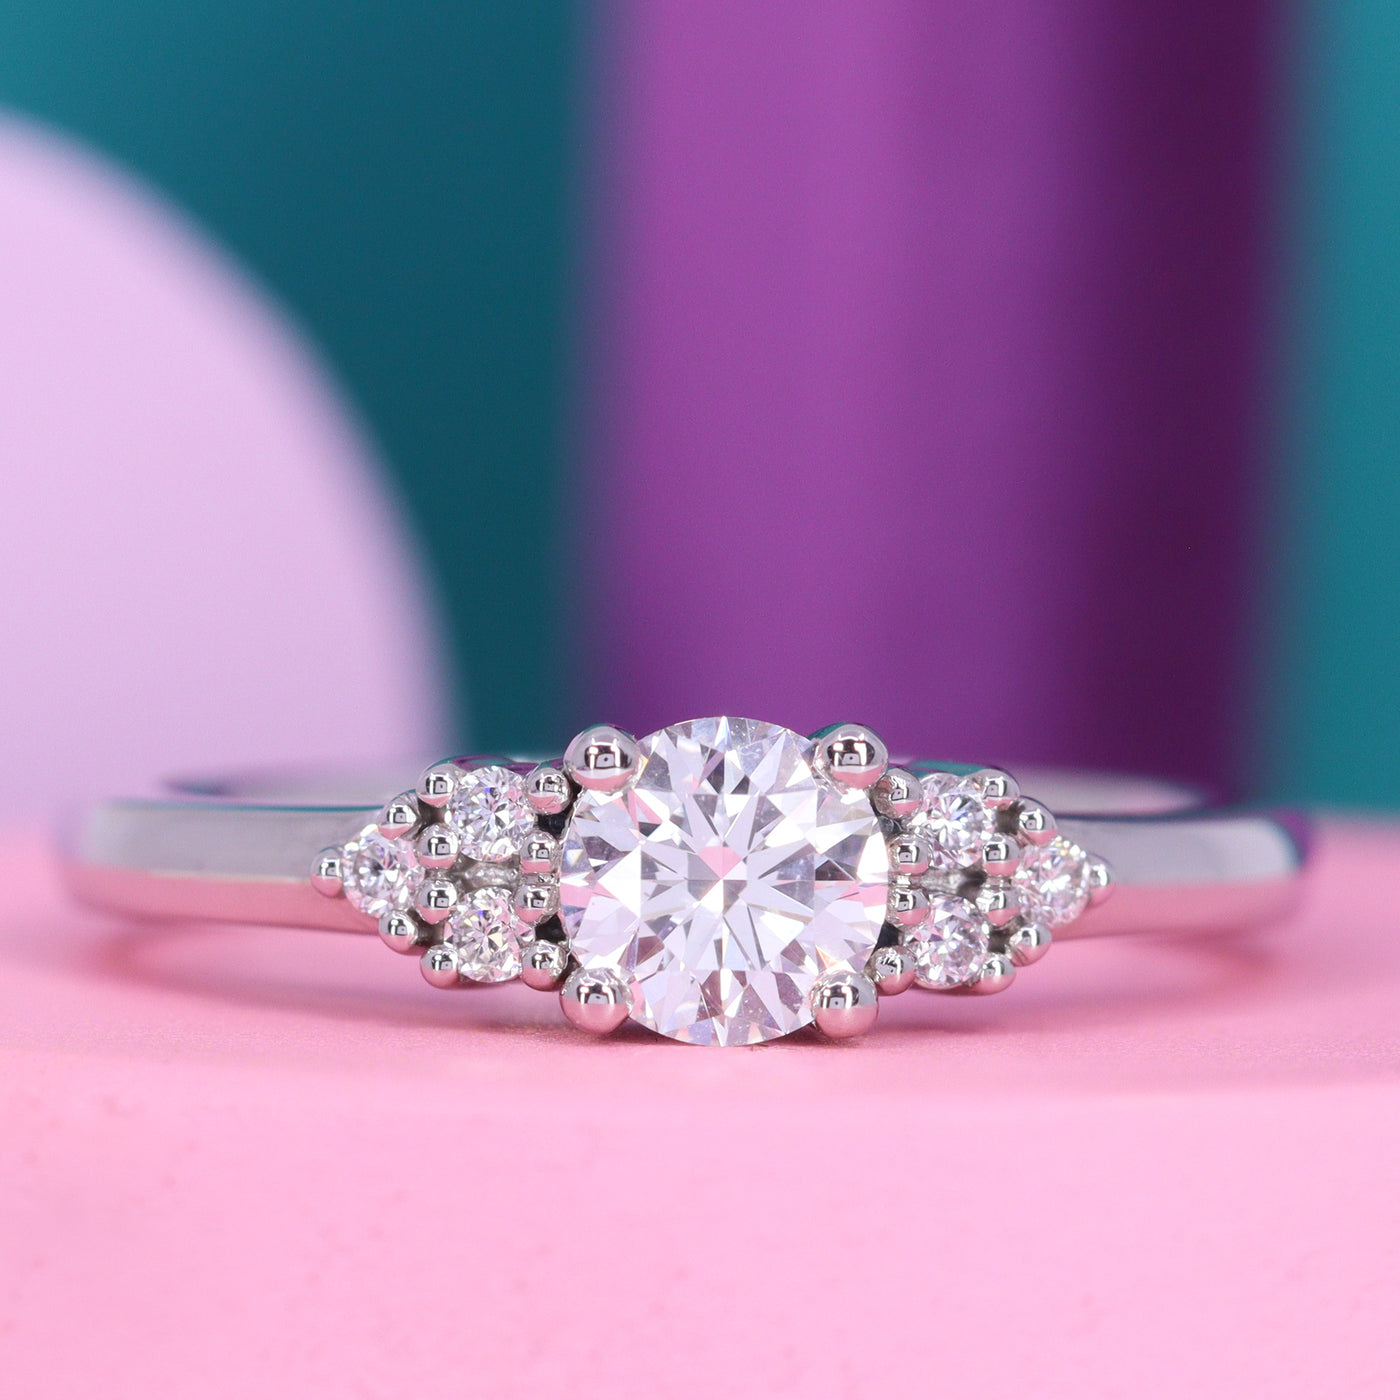 Henrietta - Round Brilliant Cut White Diamond Engagement Ring - Made To Order